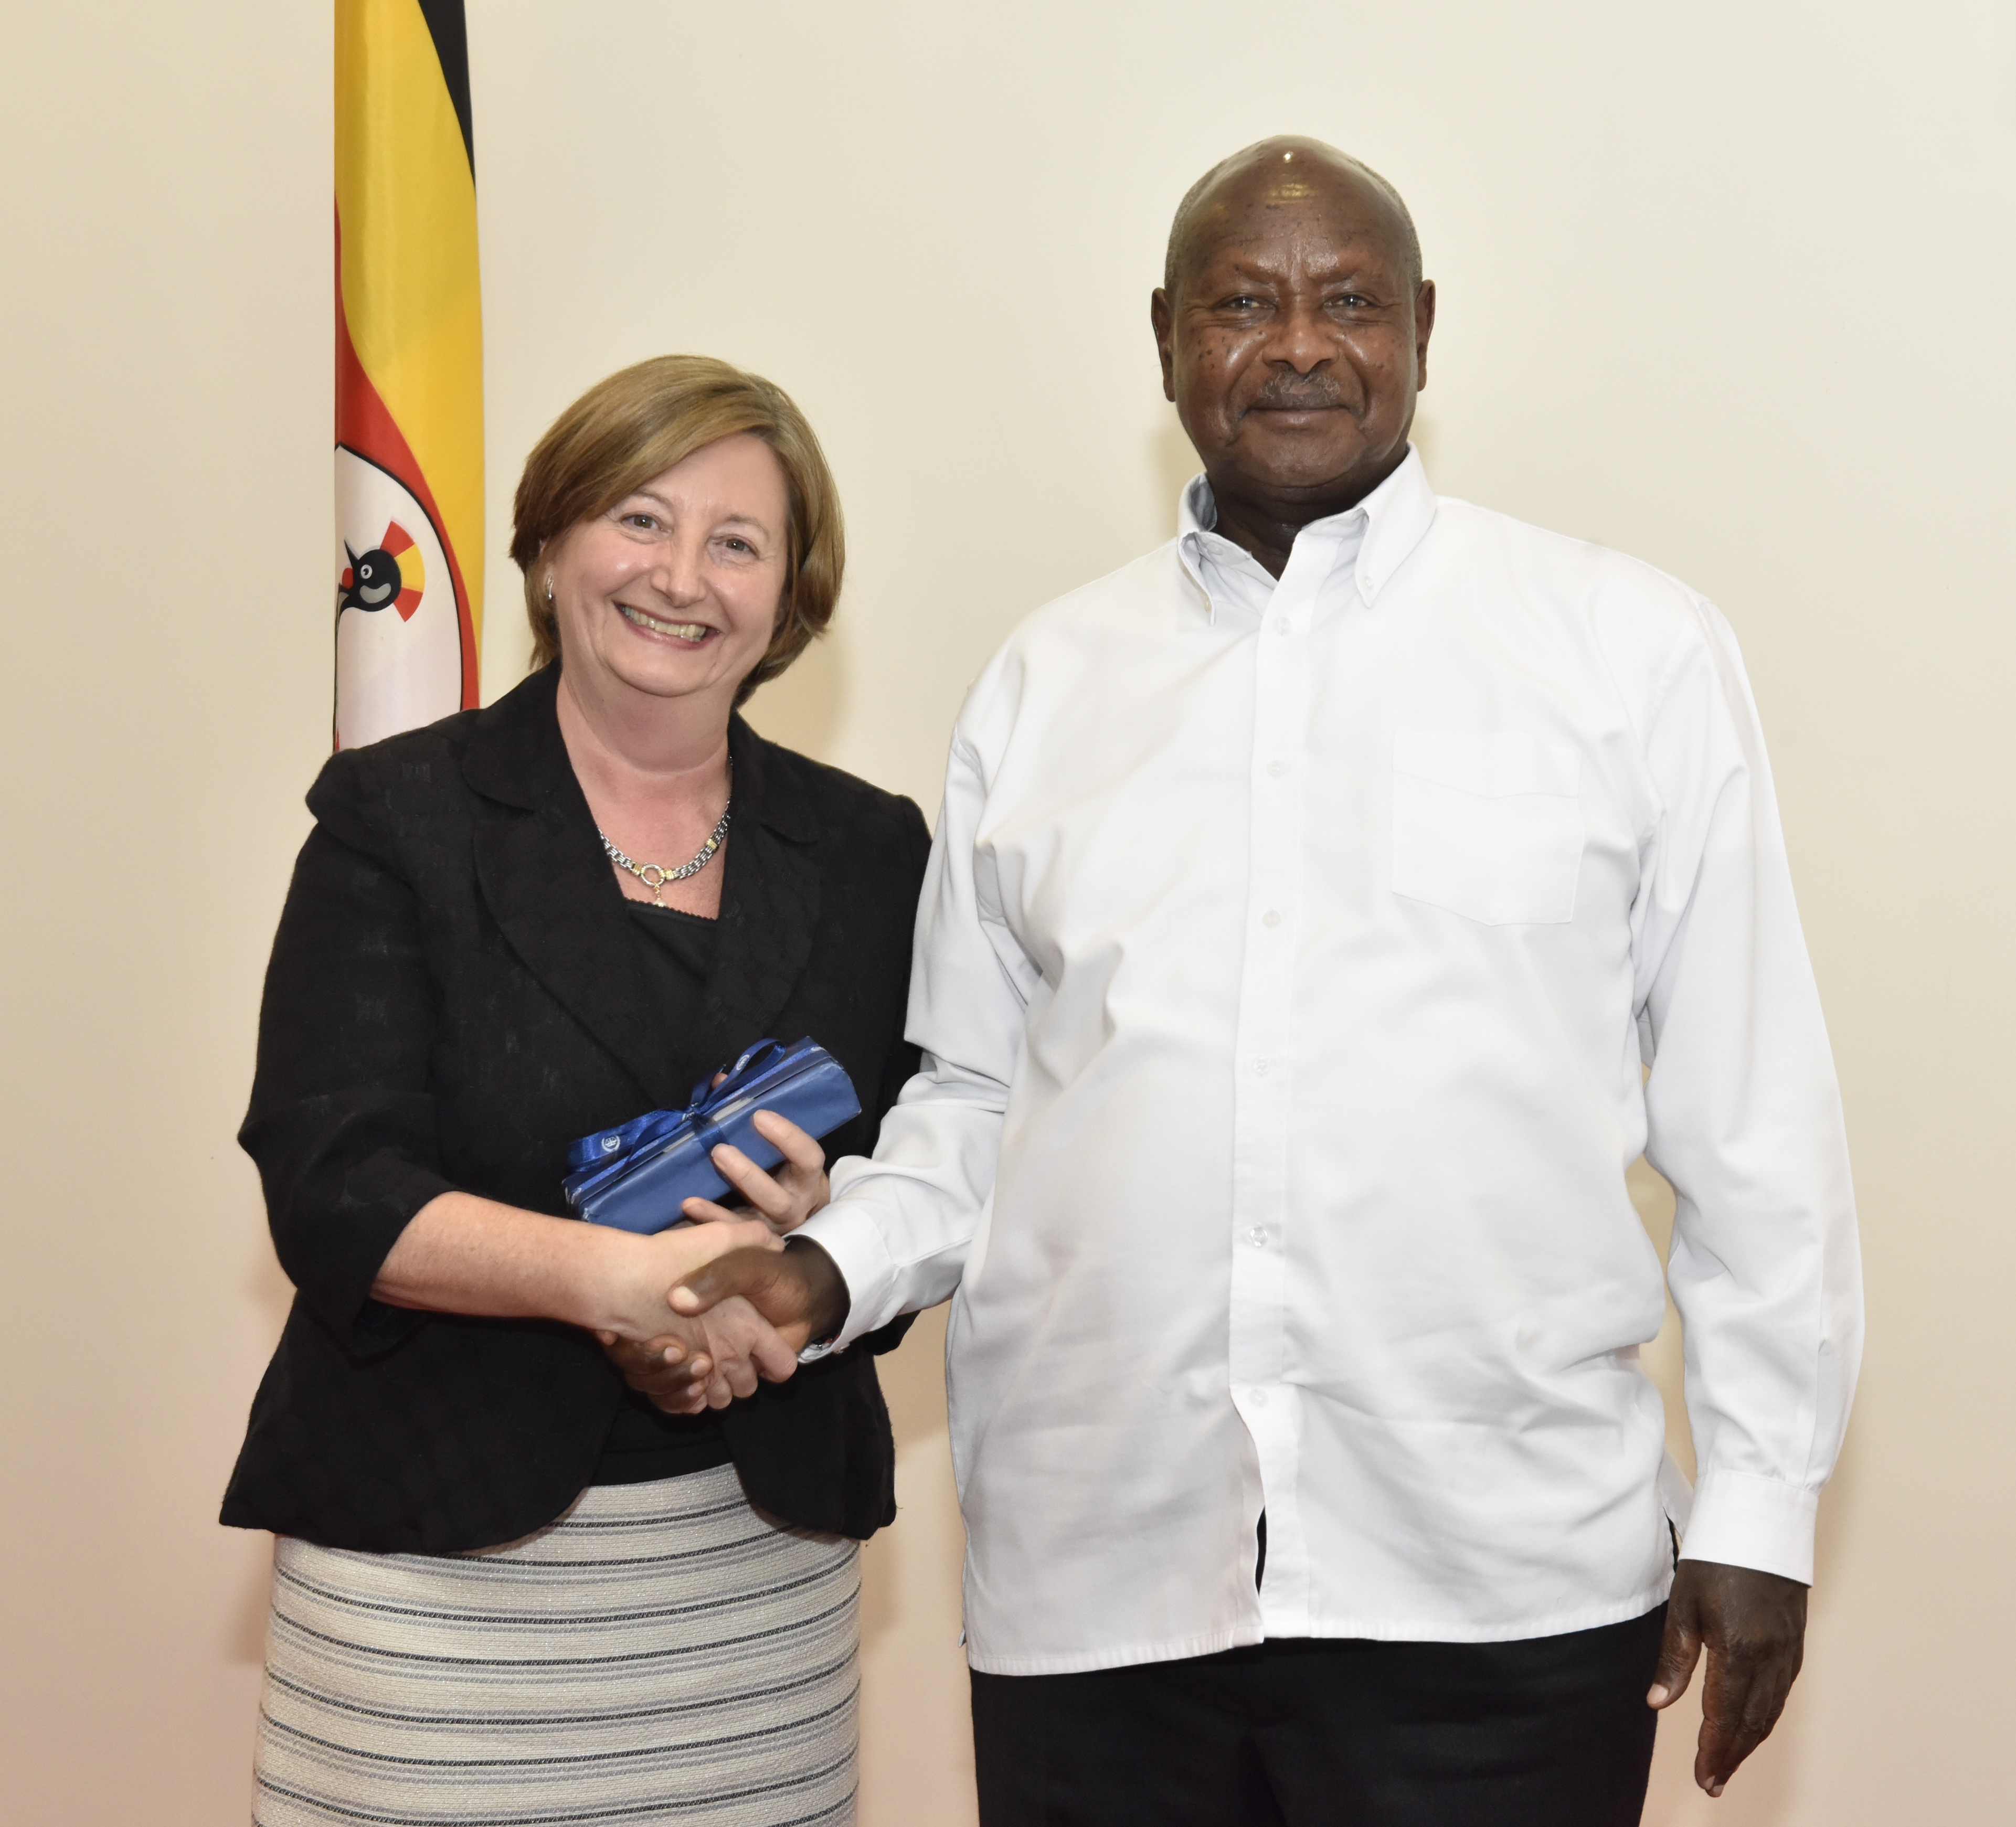 ICC President meets with President of Uganda